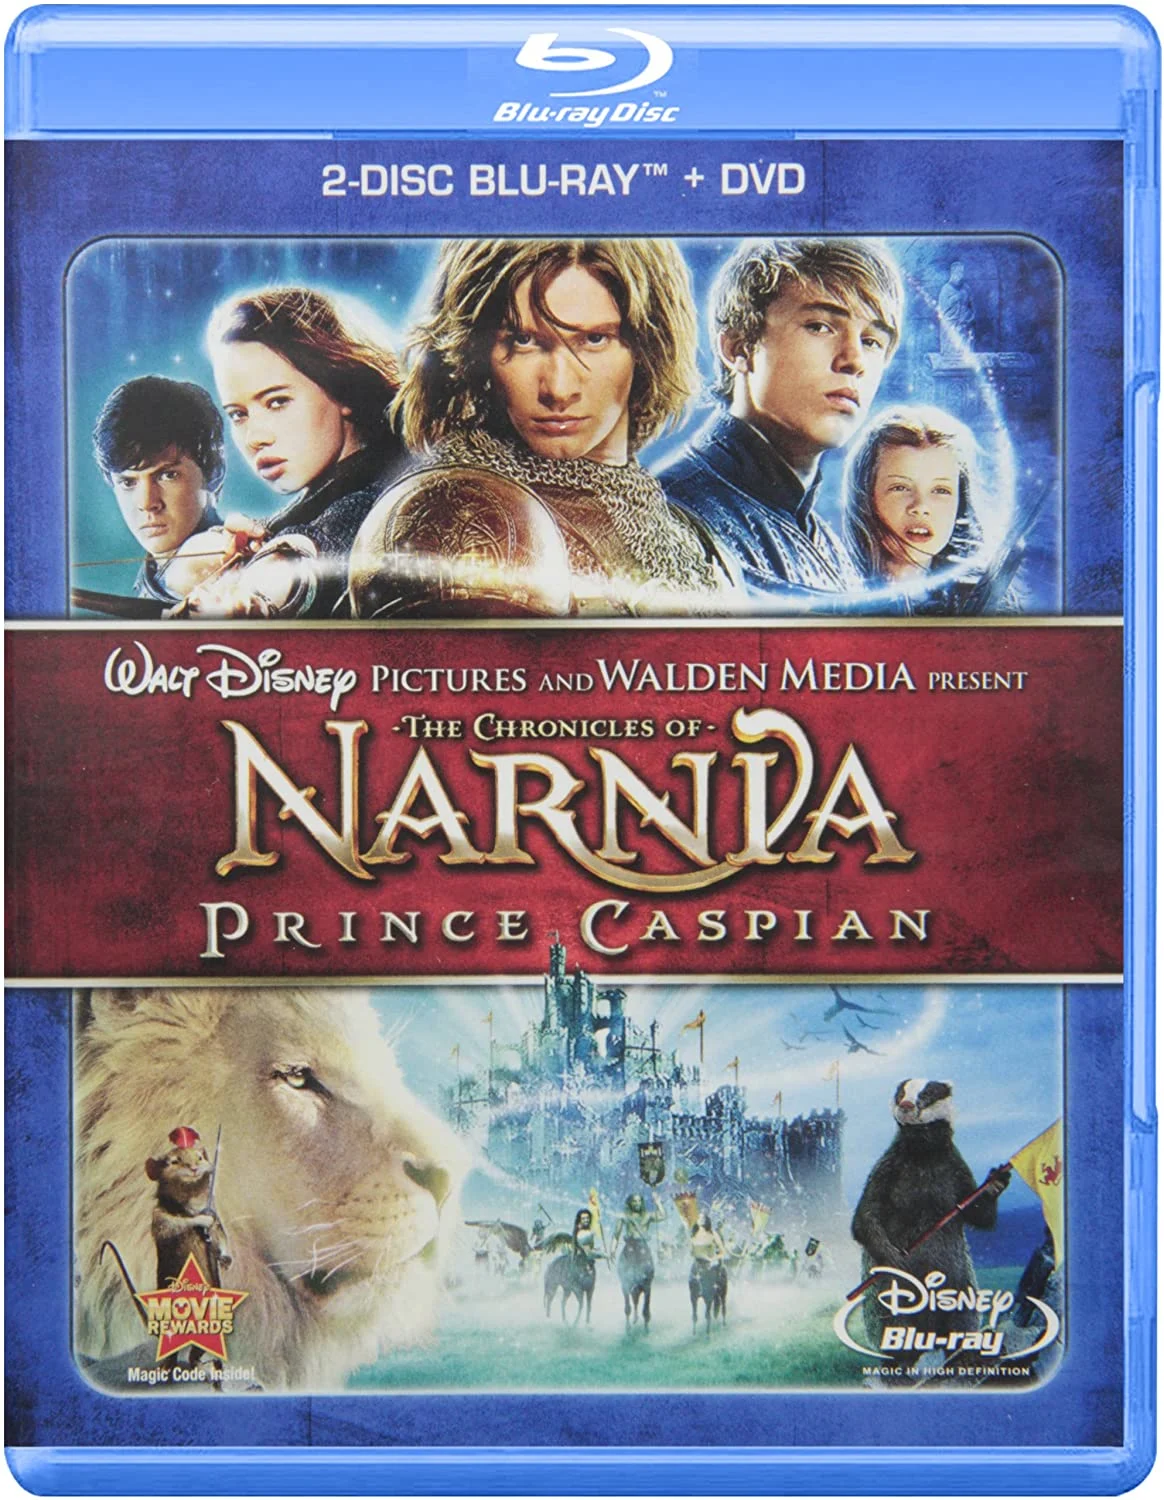 Chronicles of Narnia: Prince Caspian (Blu-ray) on MovieShack